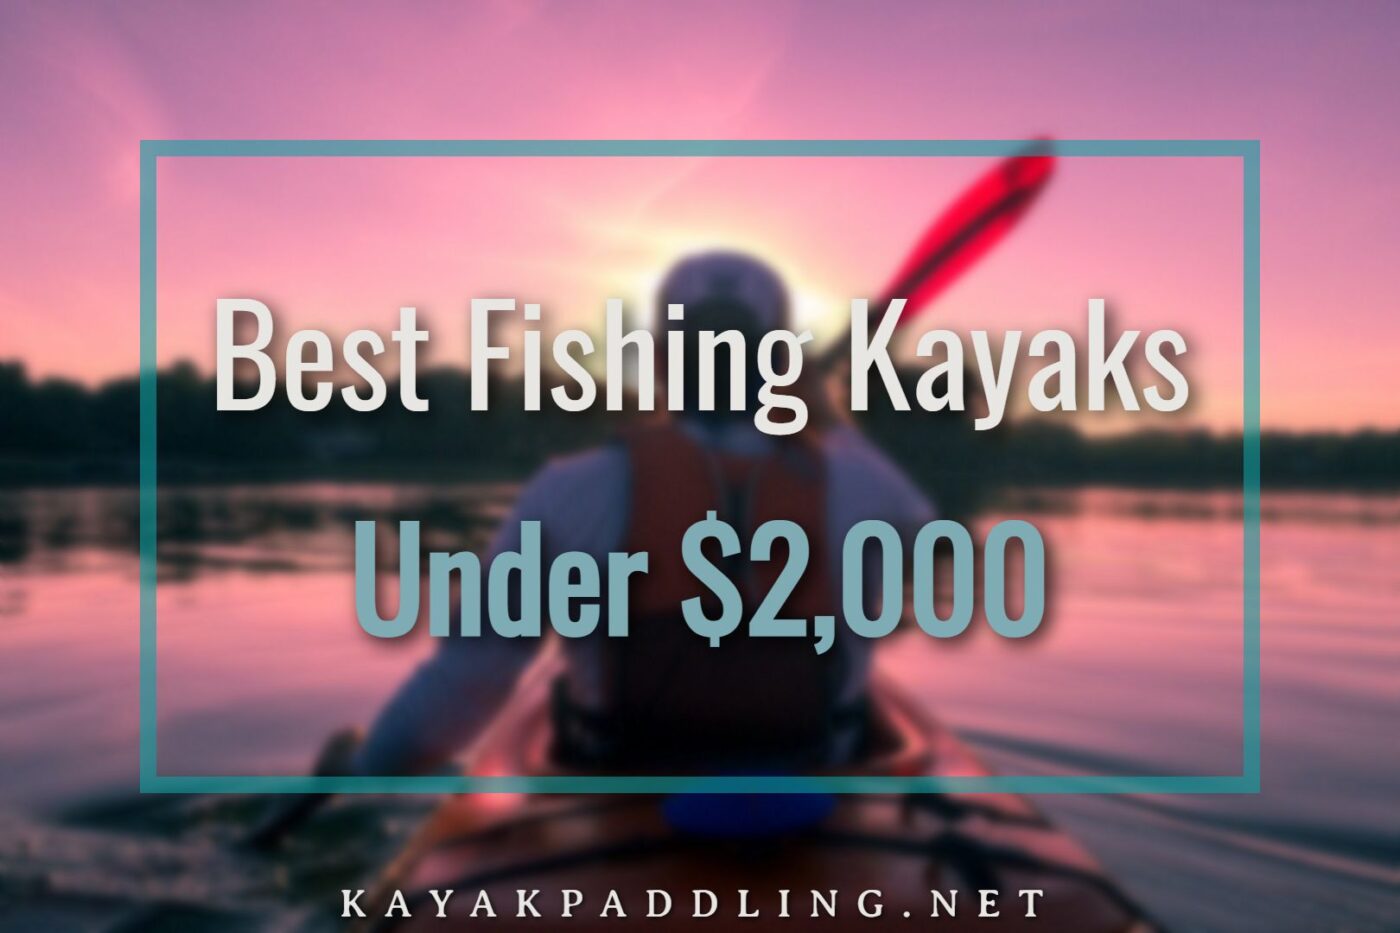 Bedste fiskekajakker under $2,000